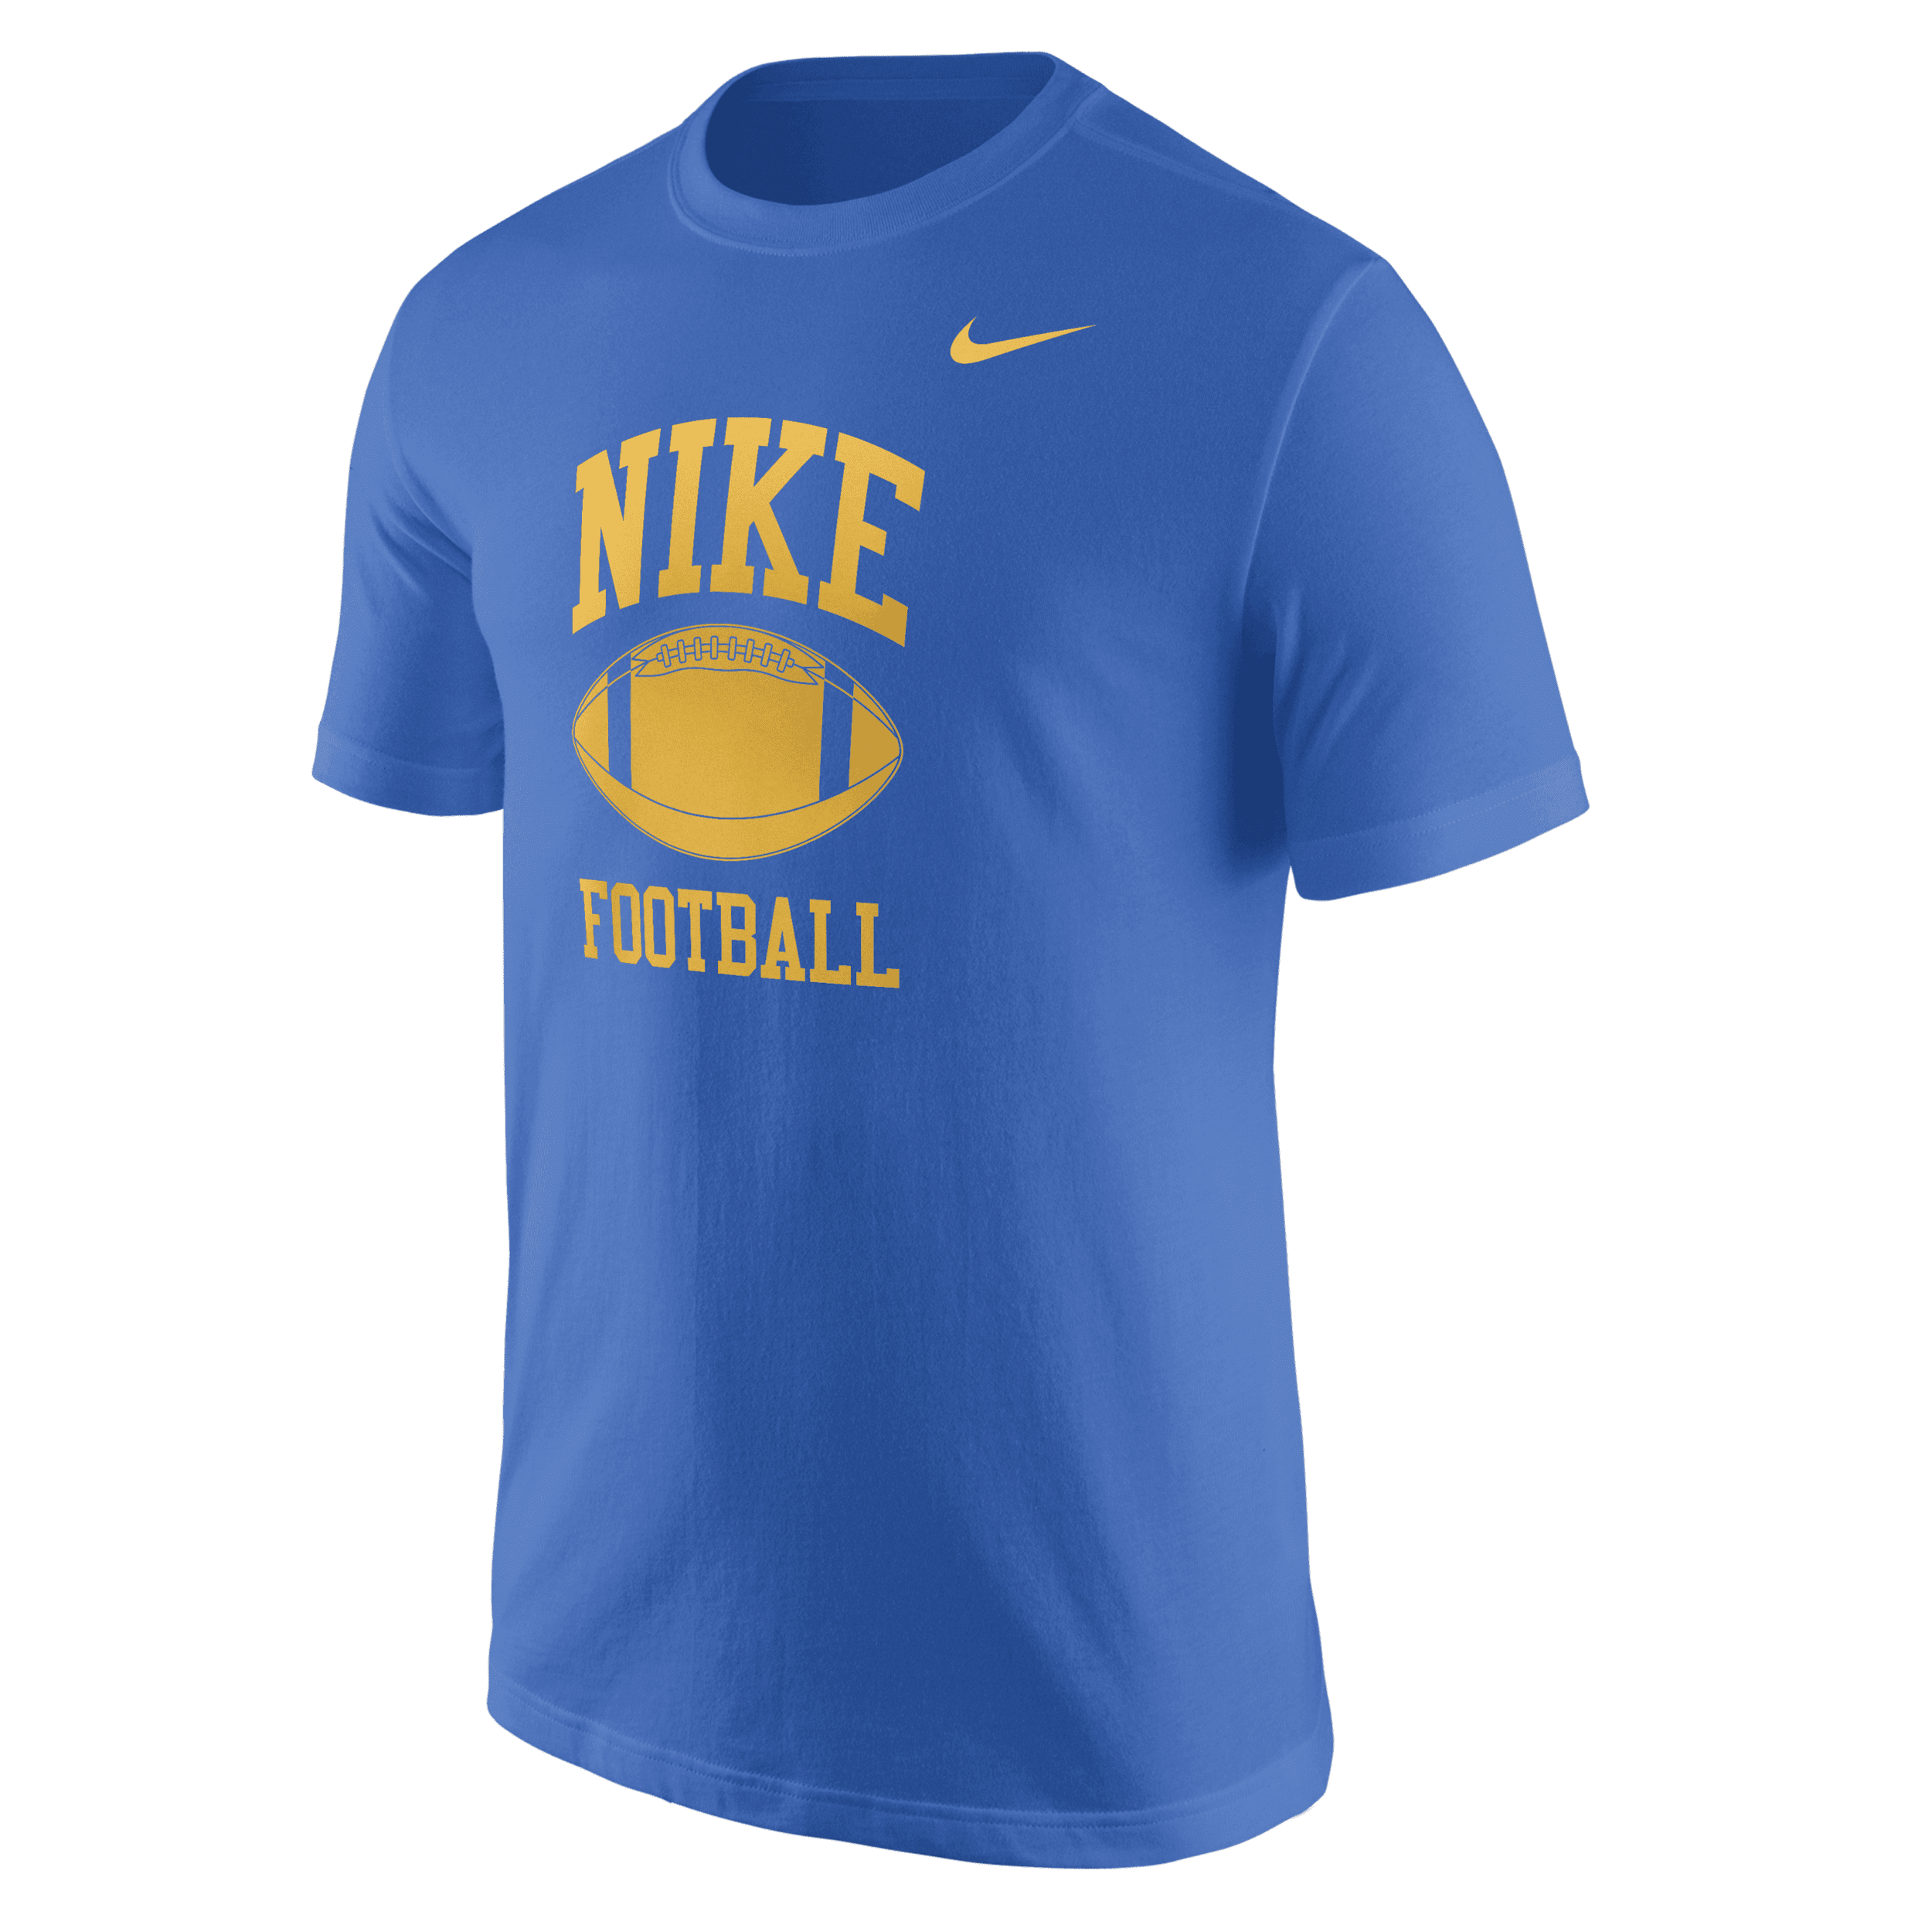 Nike Men's Football T-shirt In Blue